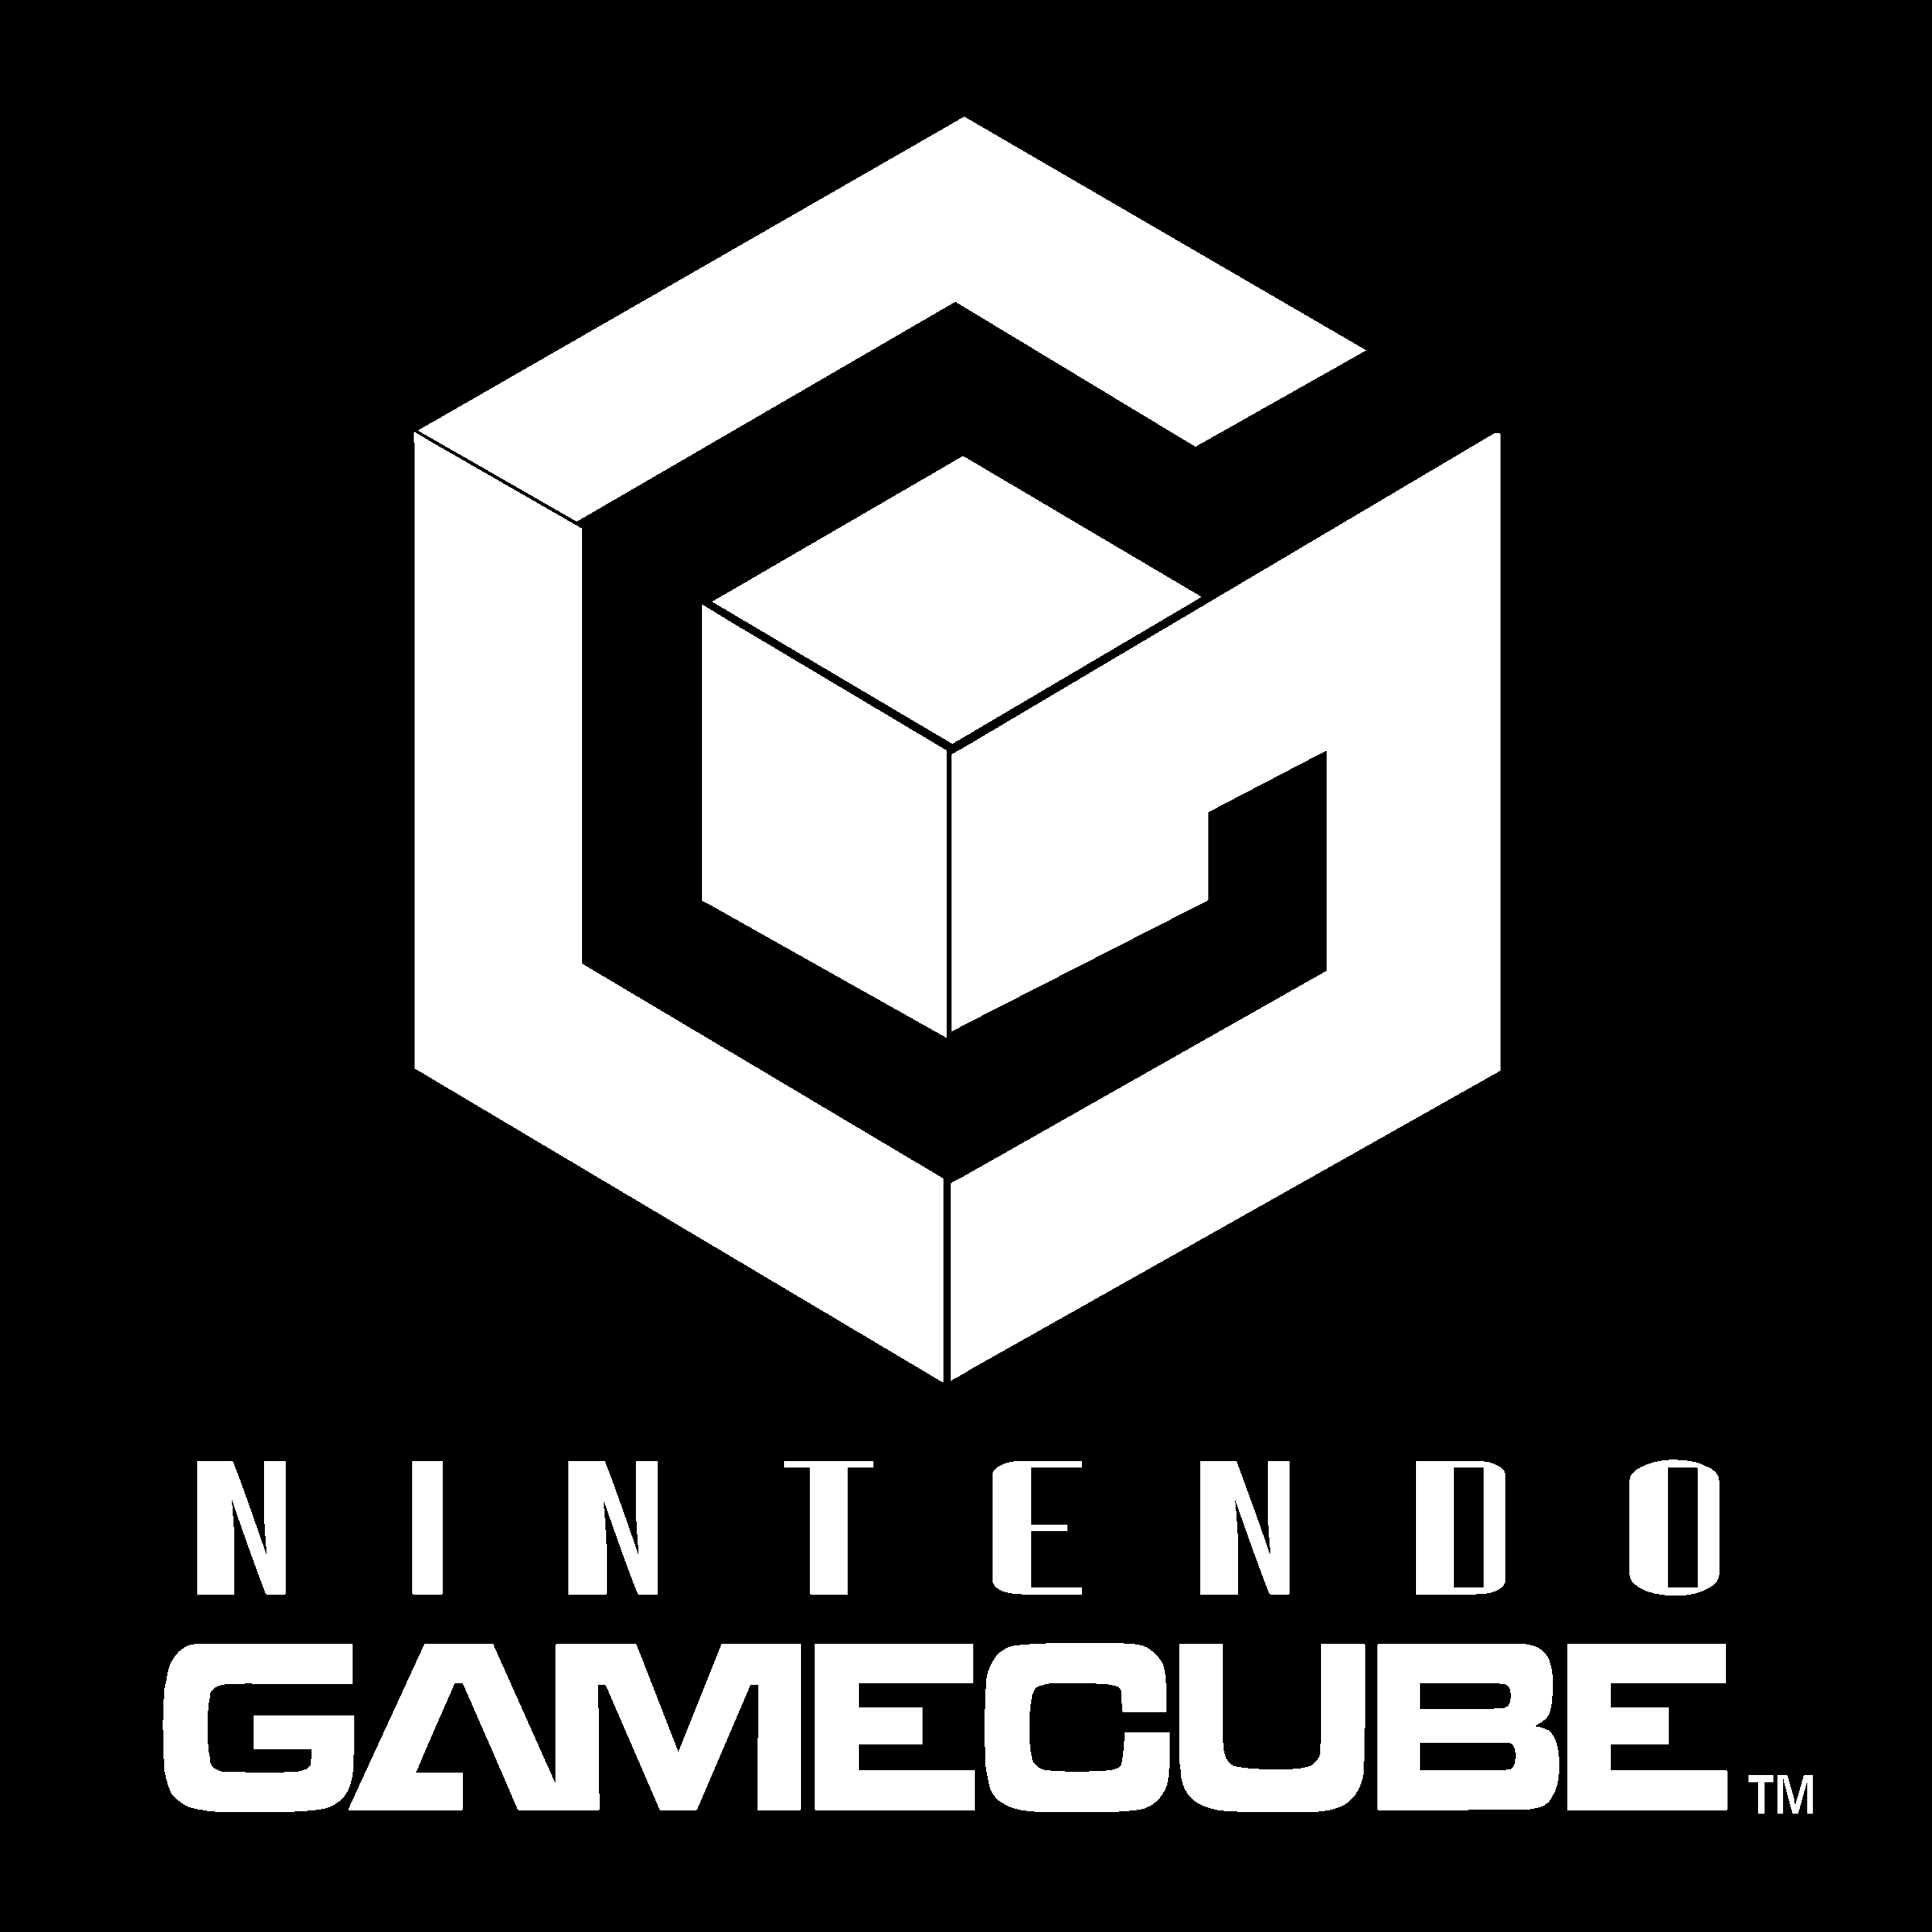 Nintendo GameCube Logo - Nintendo Gamecube Logo PNG Transparent & SVG Vector - Freebie Supply